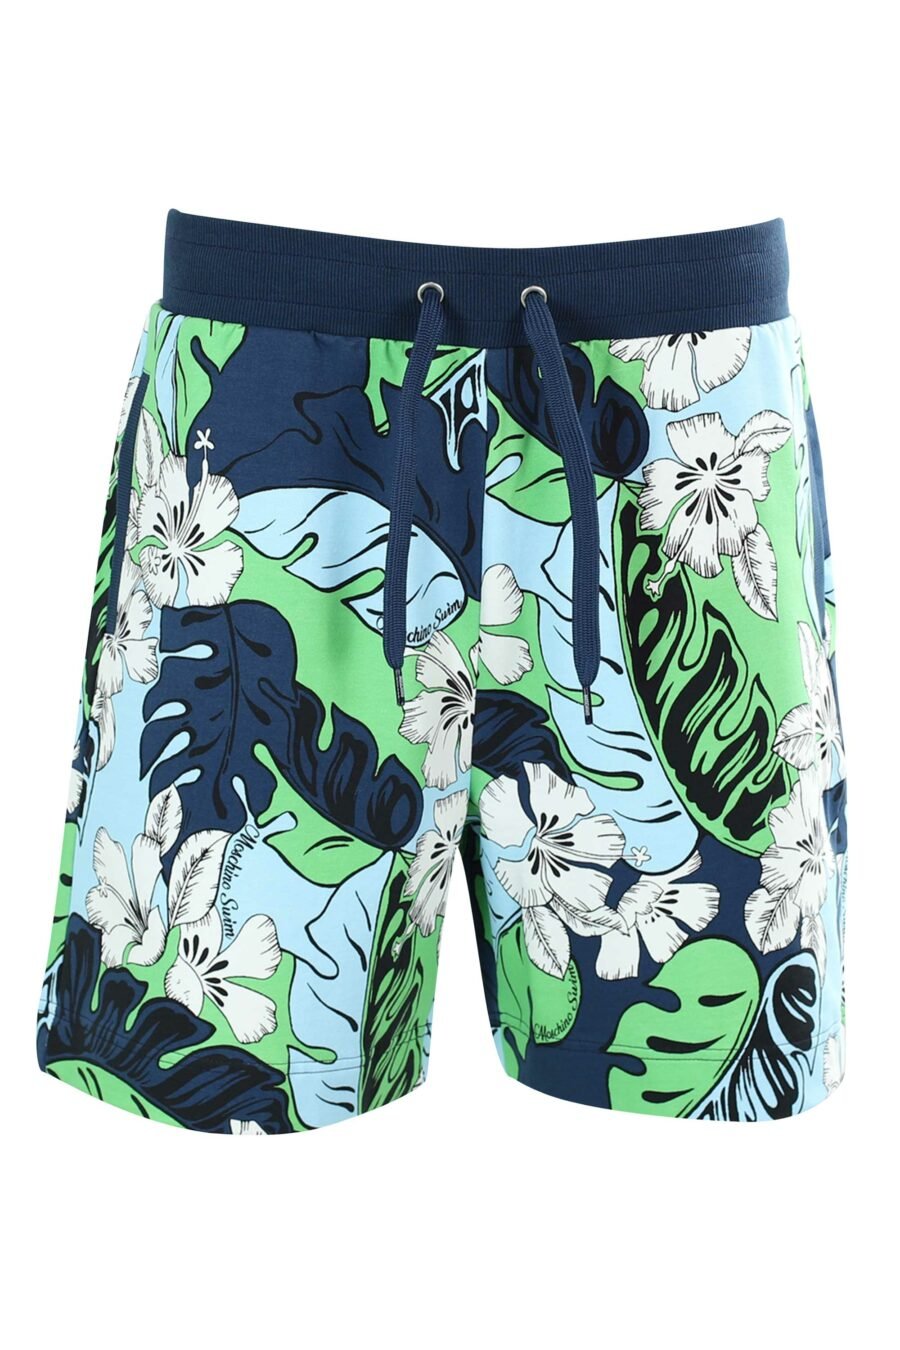 Blaue Midi-Shorts mit mehrfarbigem Dschungelblatt-Print - 889316293173